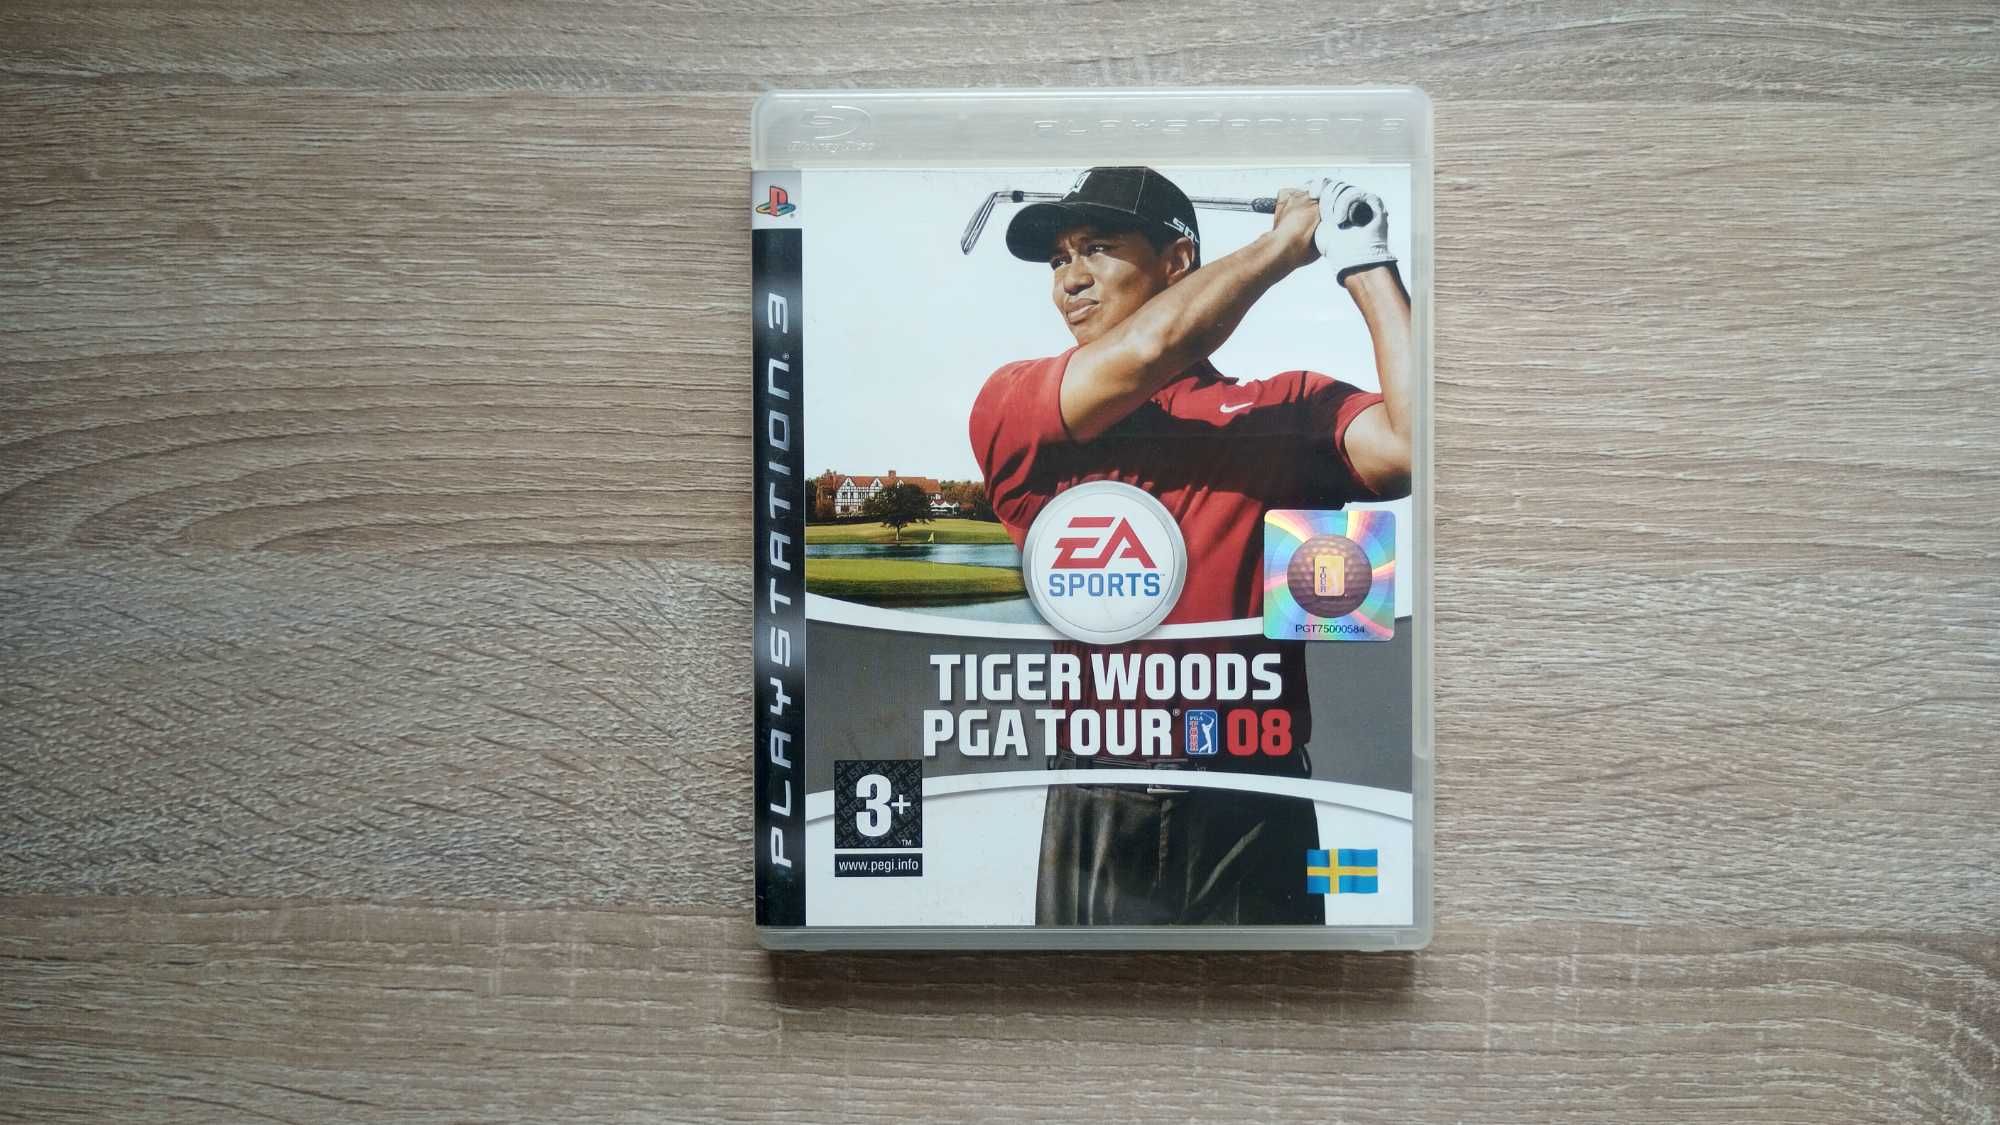 Vand Tiger Woods PGA Tour 08 PS3 Play Station 3